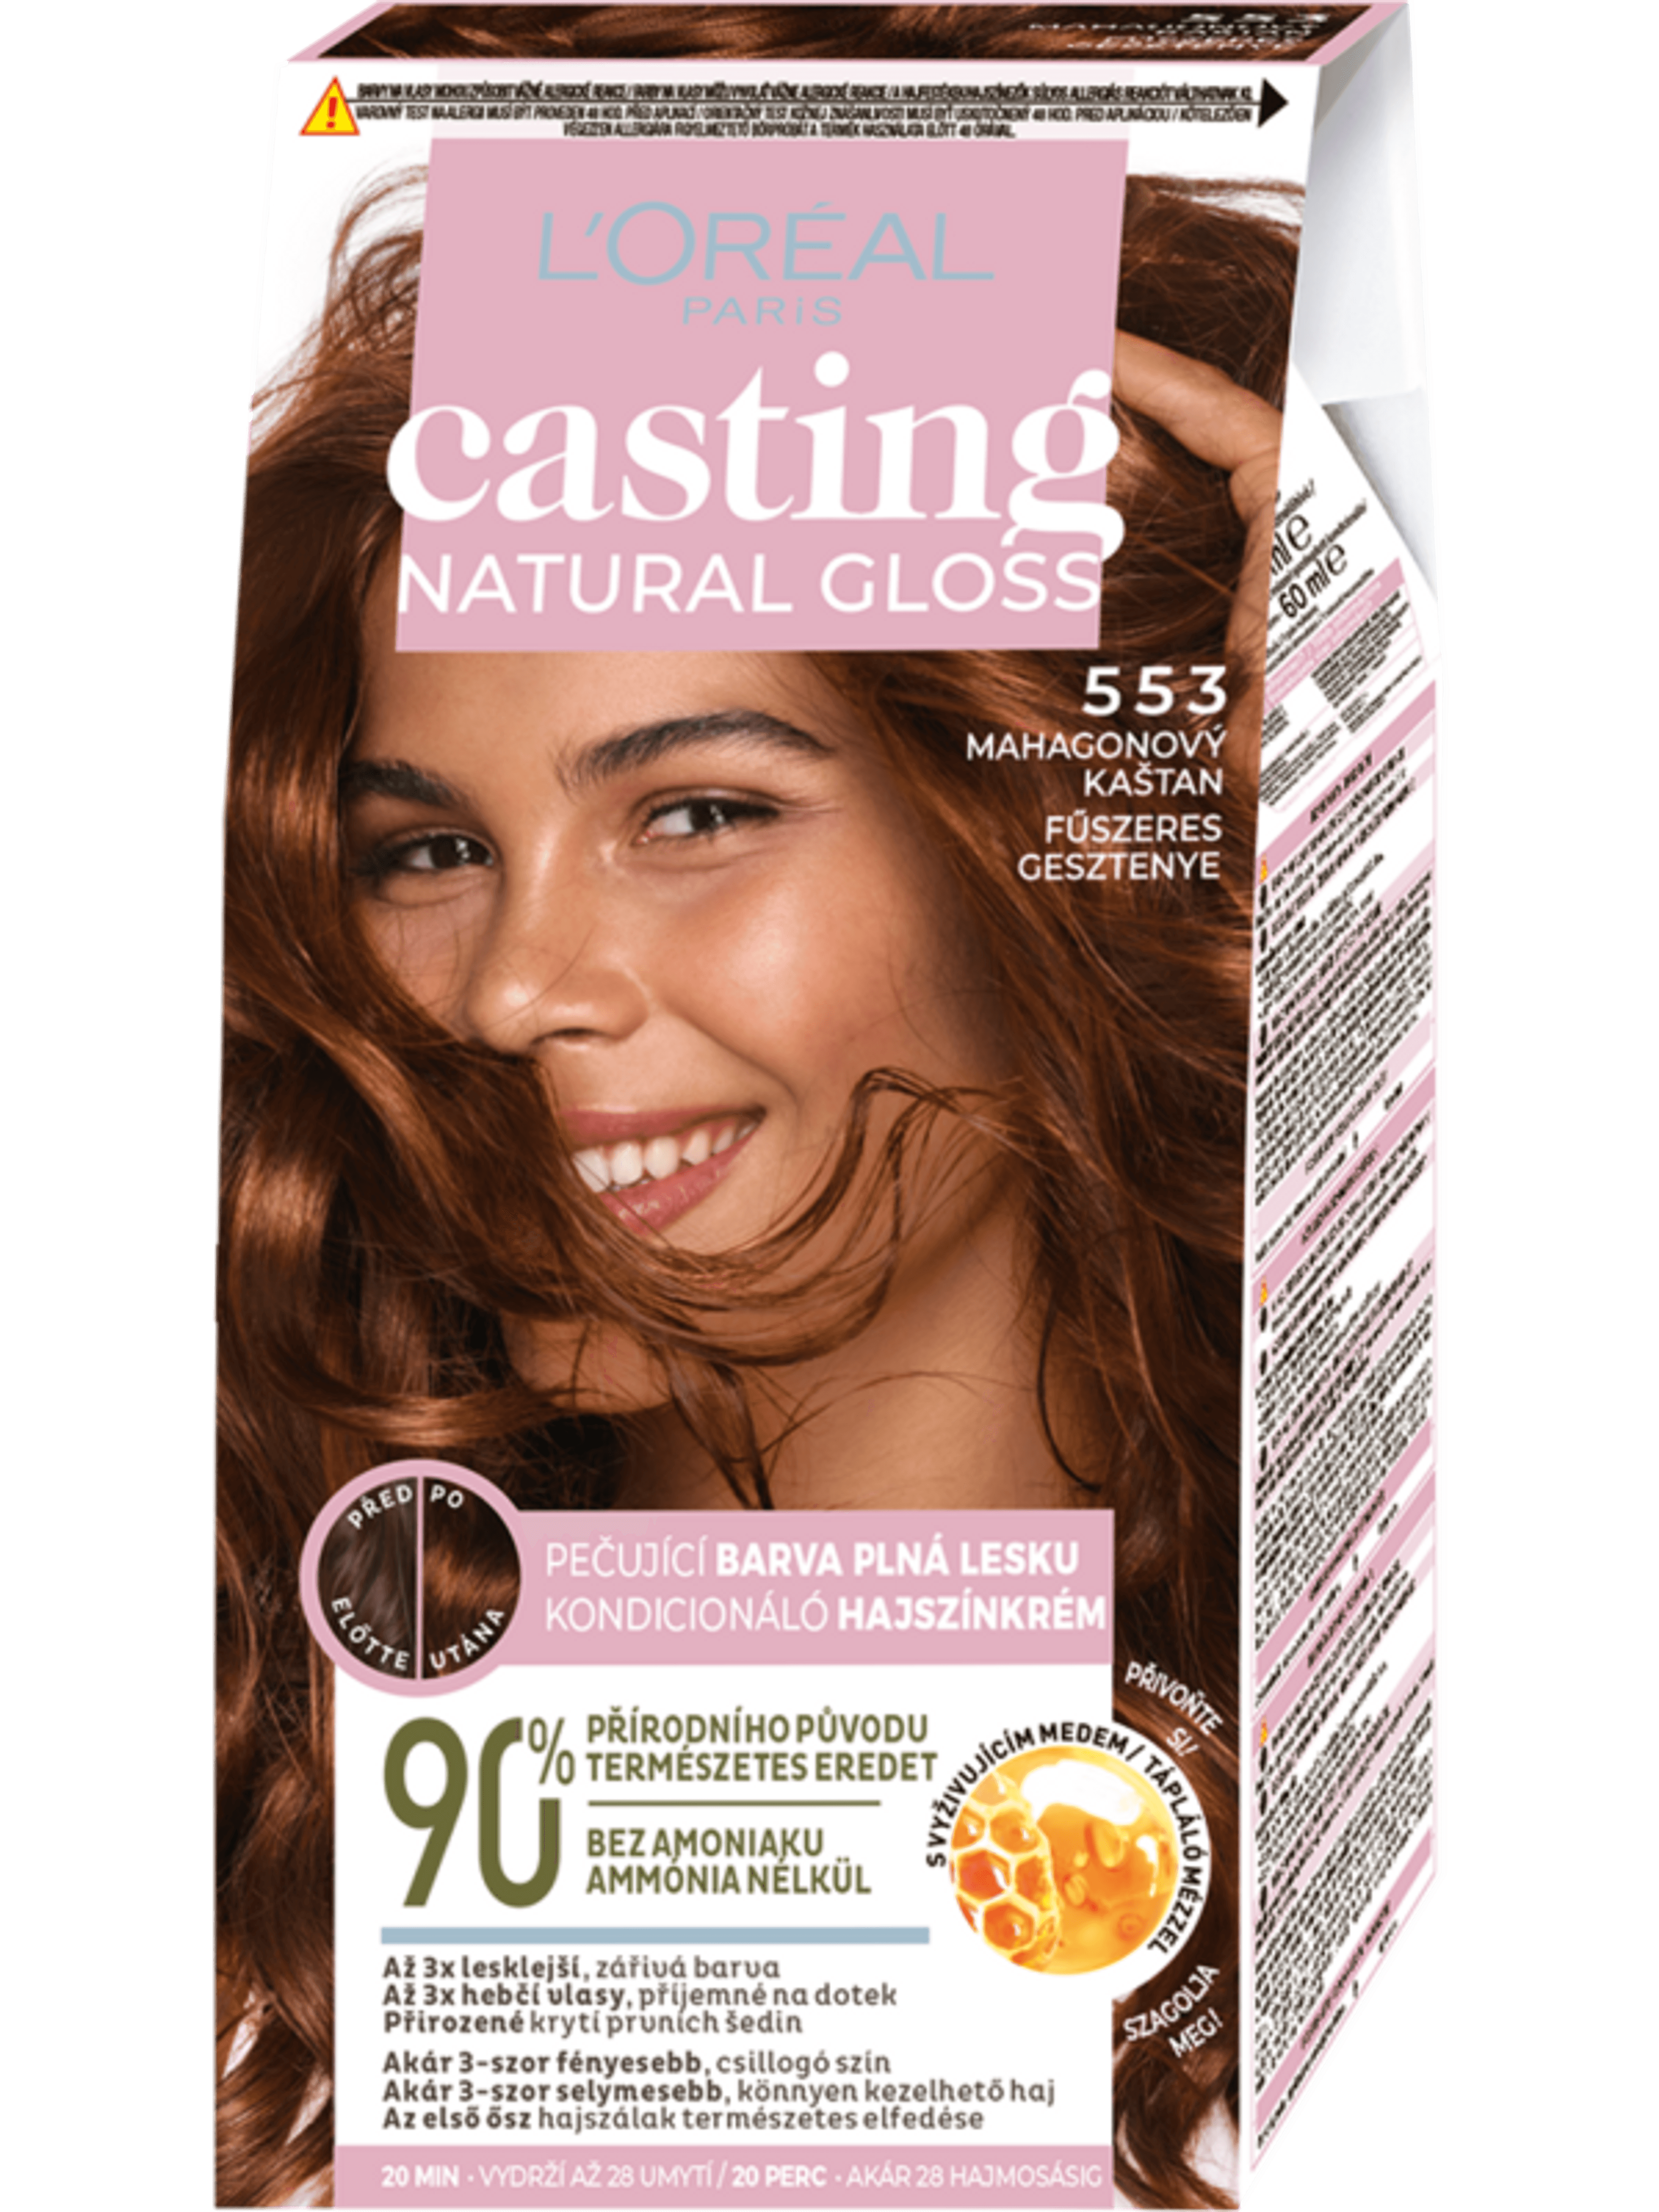 L'Oreal Paris Casting Natural Gloss hajszínező, 553 spiced auburn - 1 db-2